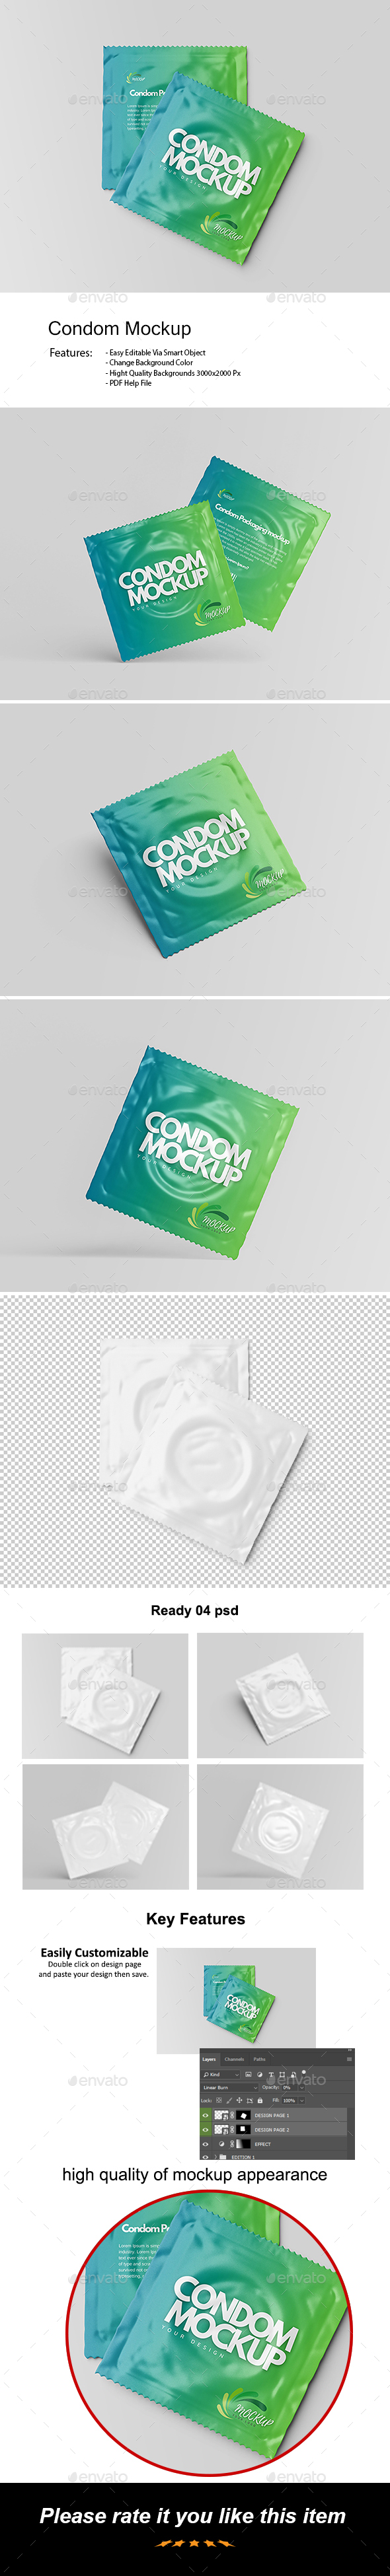 [DOWNLOAD]Condom Mockup